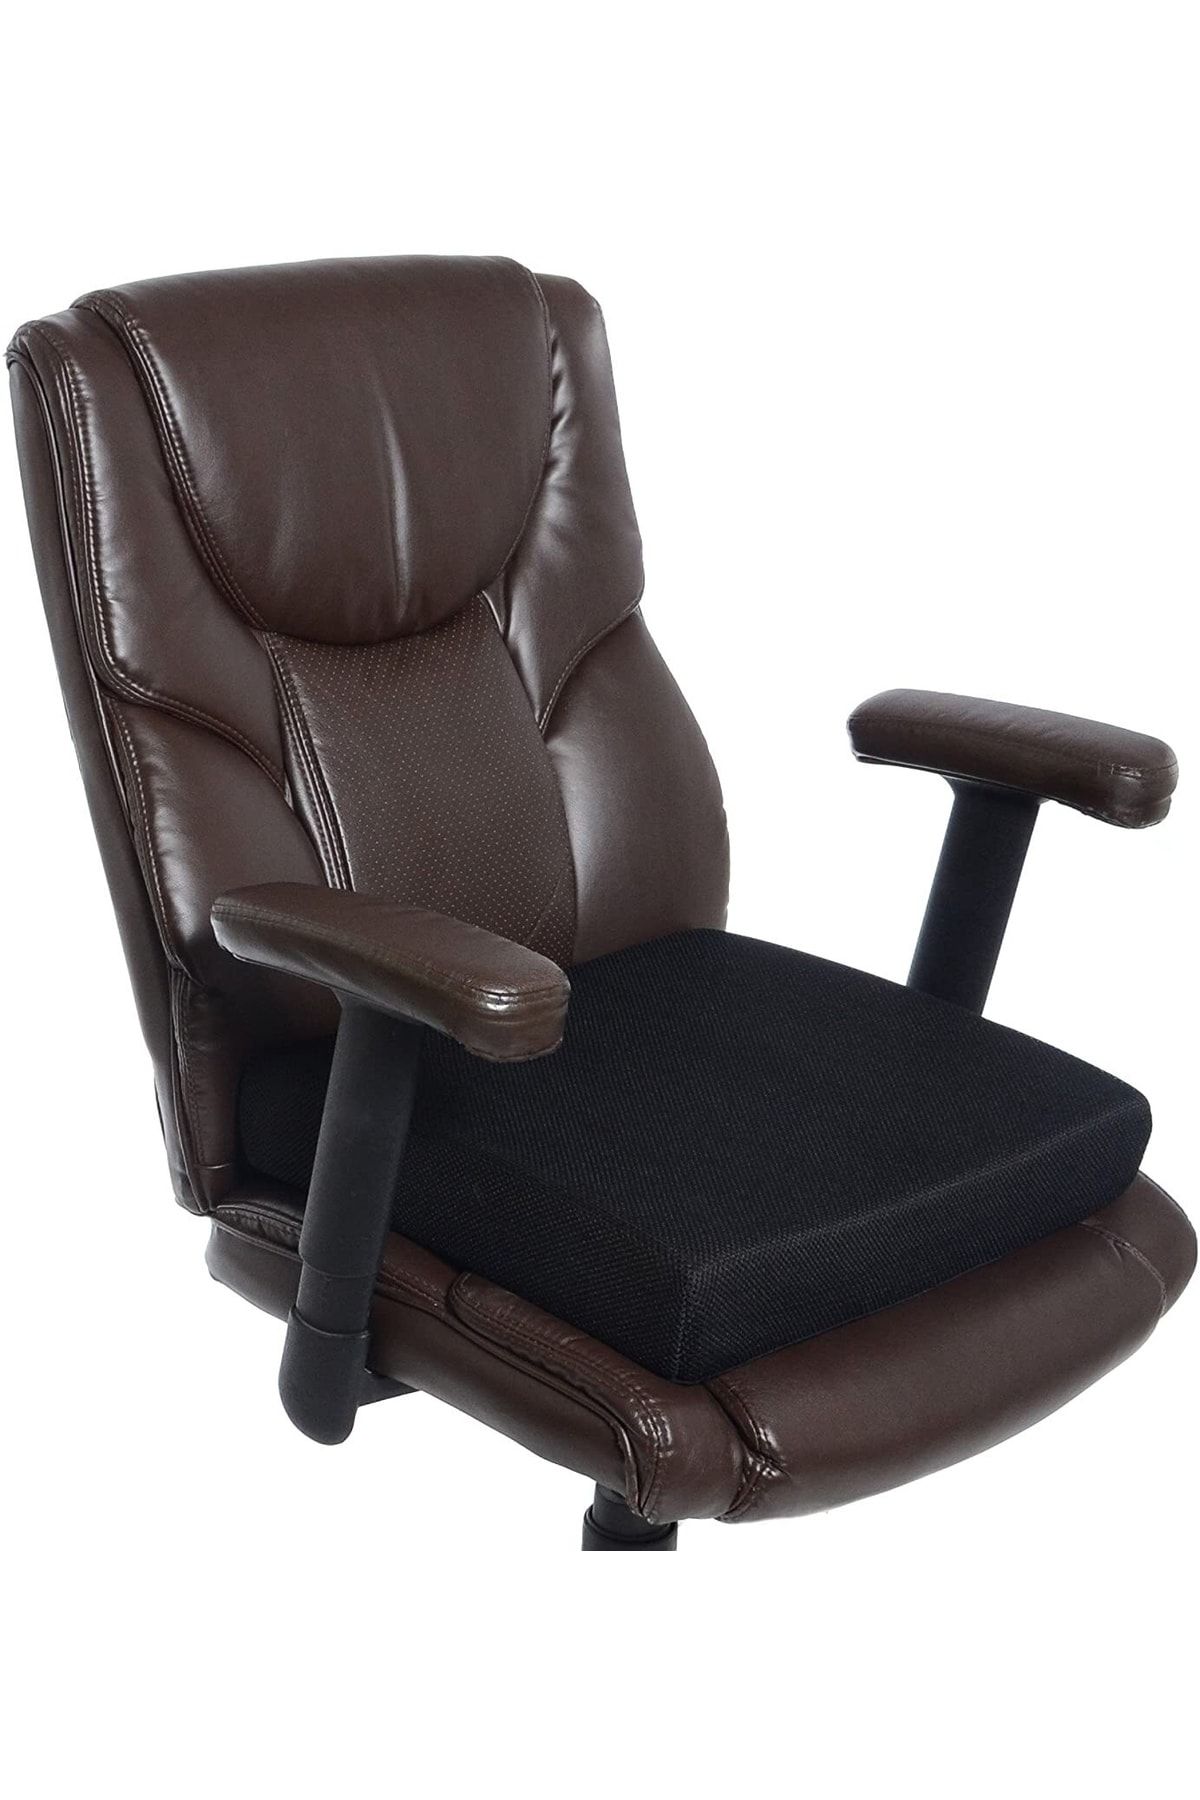 Genel Markalar Visco Oturma Minderi Ortopedik Minder Ofis Sandalyesi Ergonomik Minder Gercek Visco 3 Renk